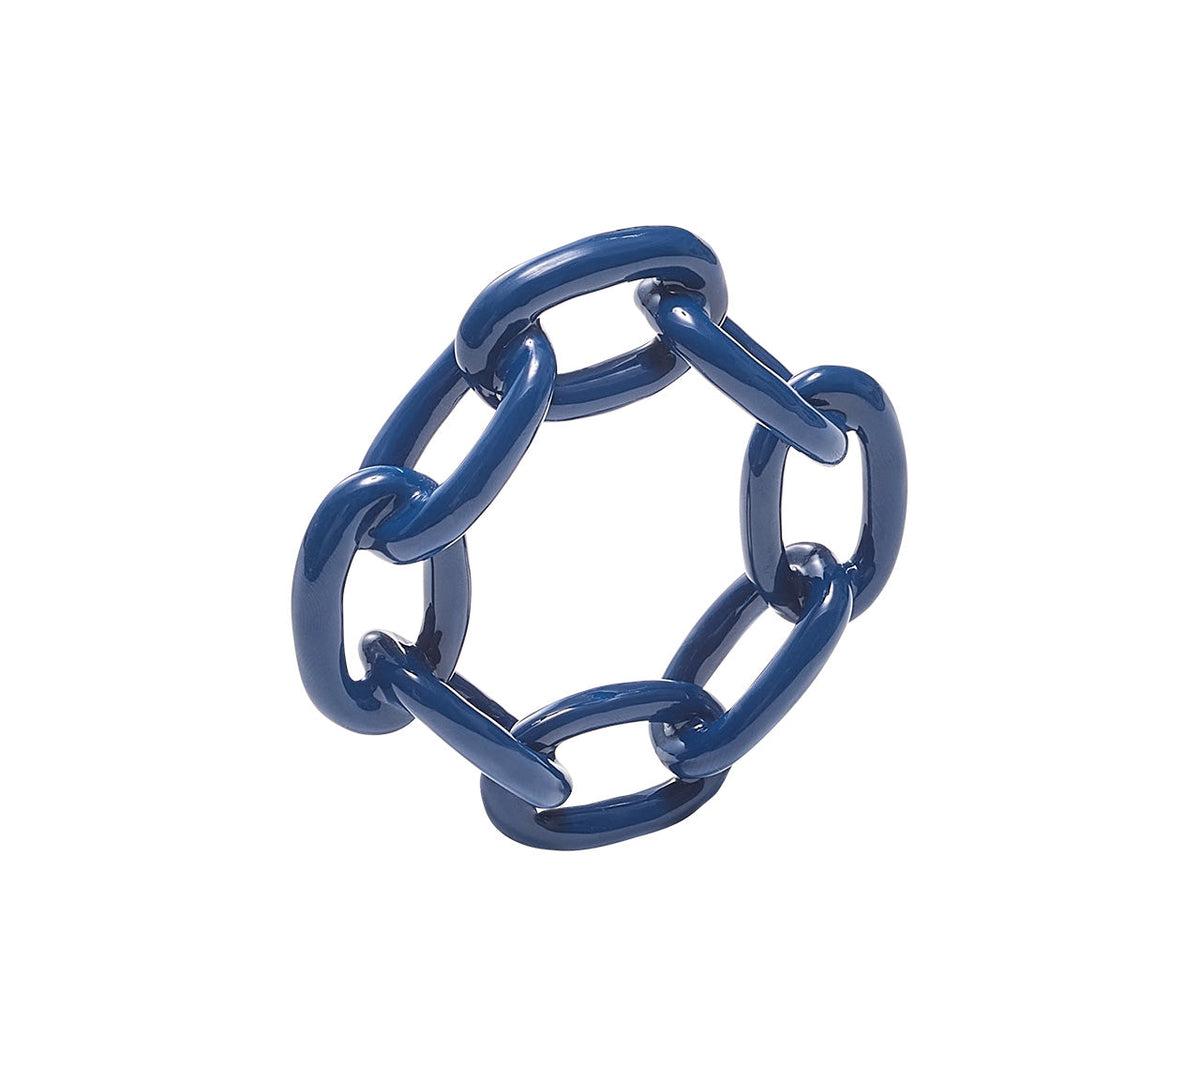 Enamel Chain Link Napkin Ring in Navy, Set of 4